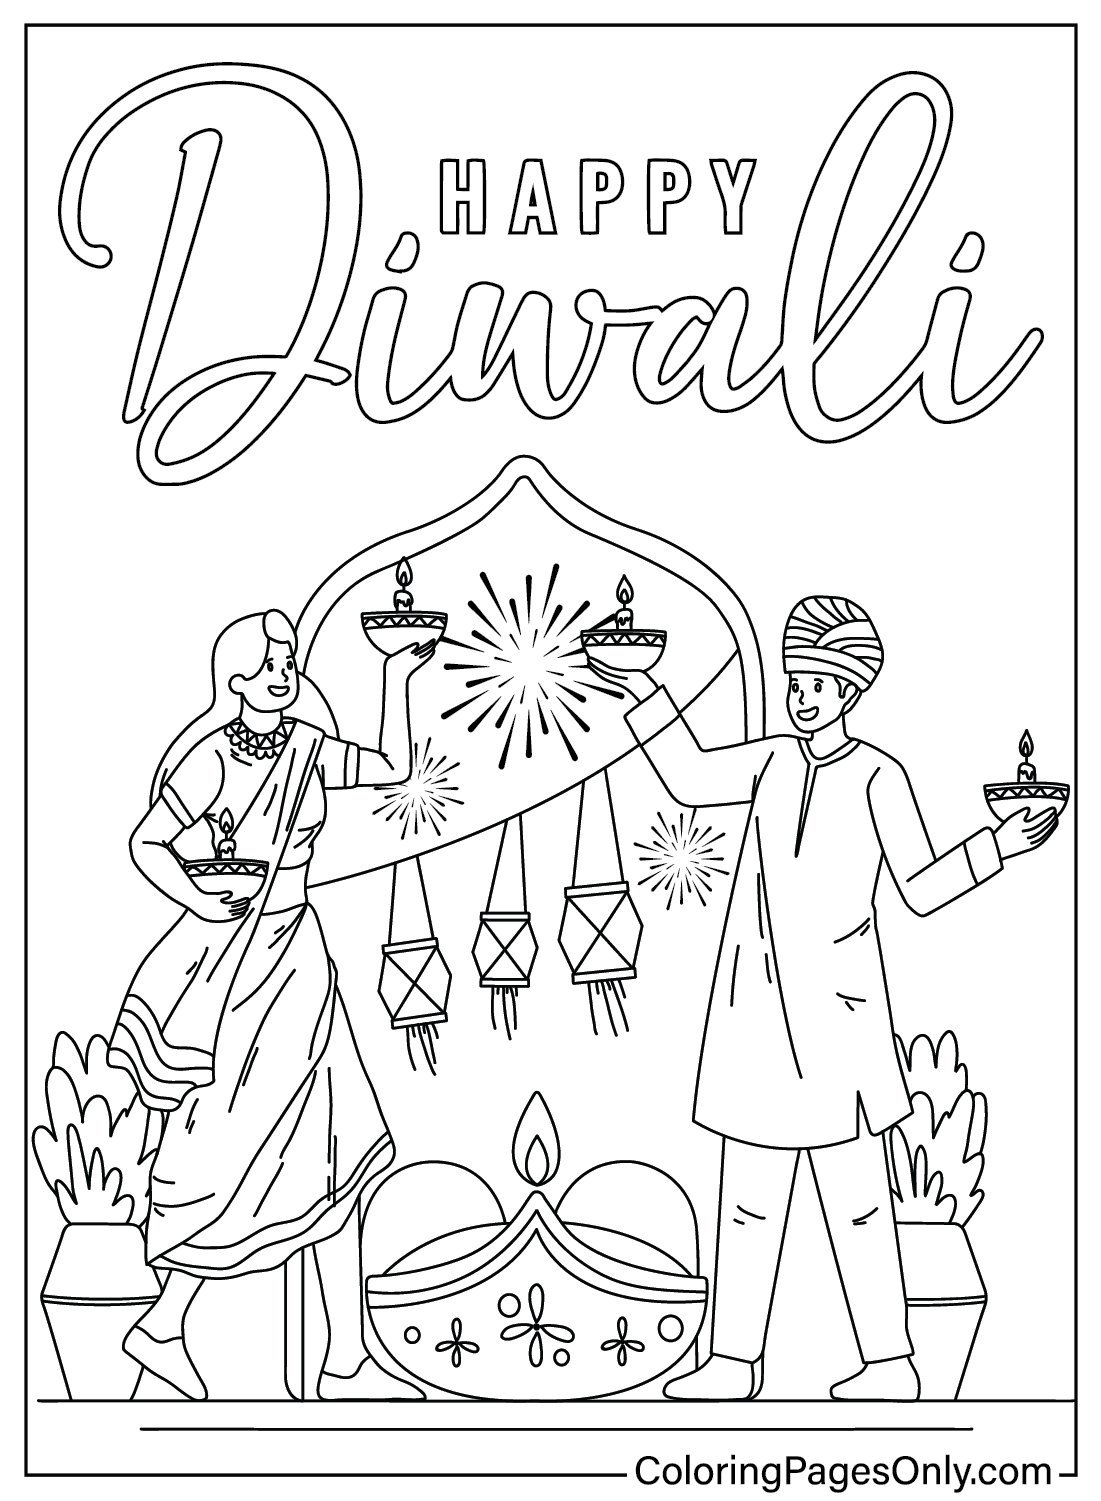 Kleurplaat Diwali van Diwali